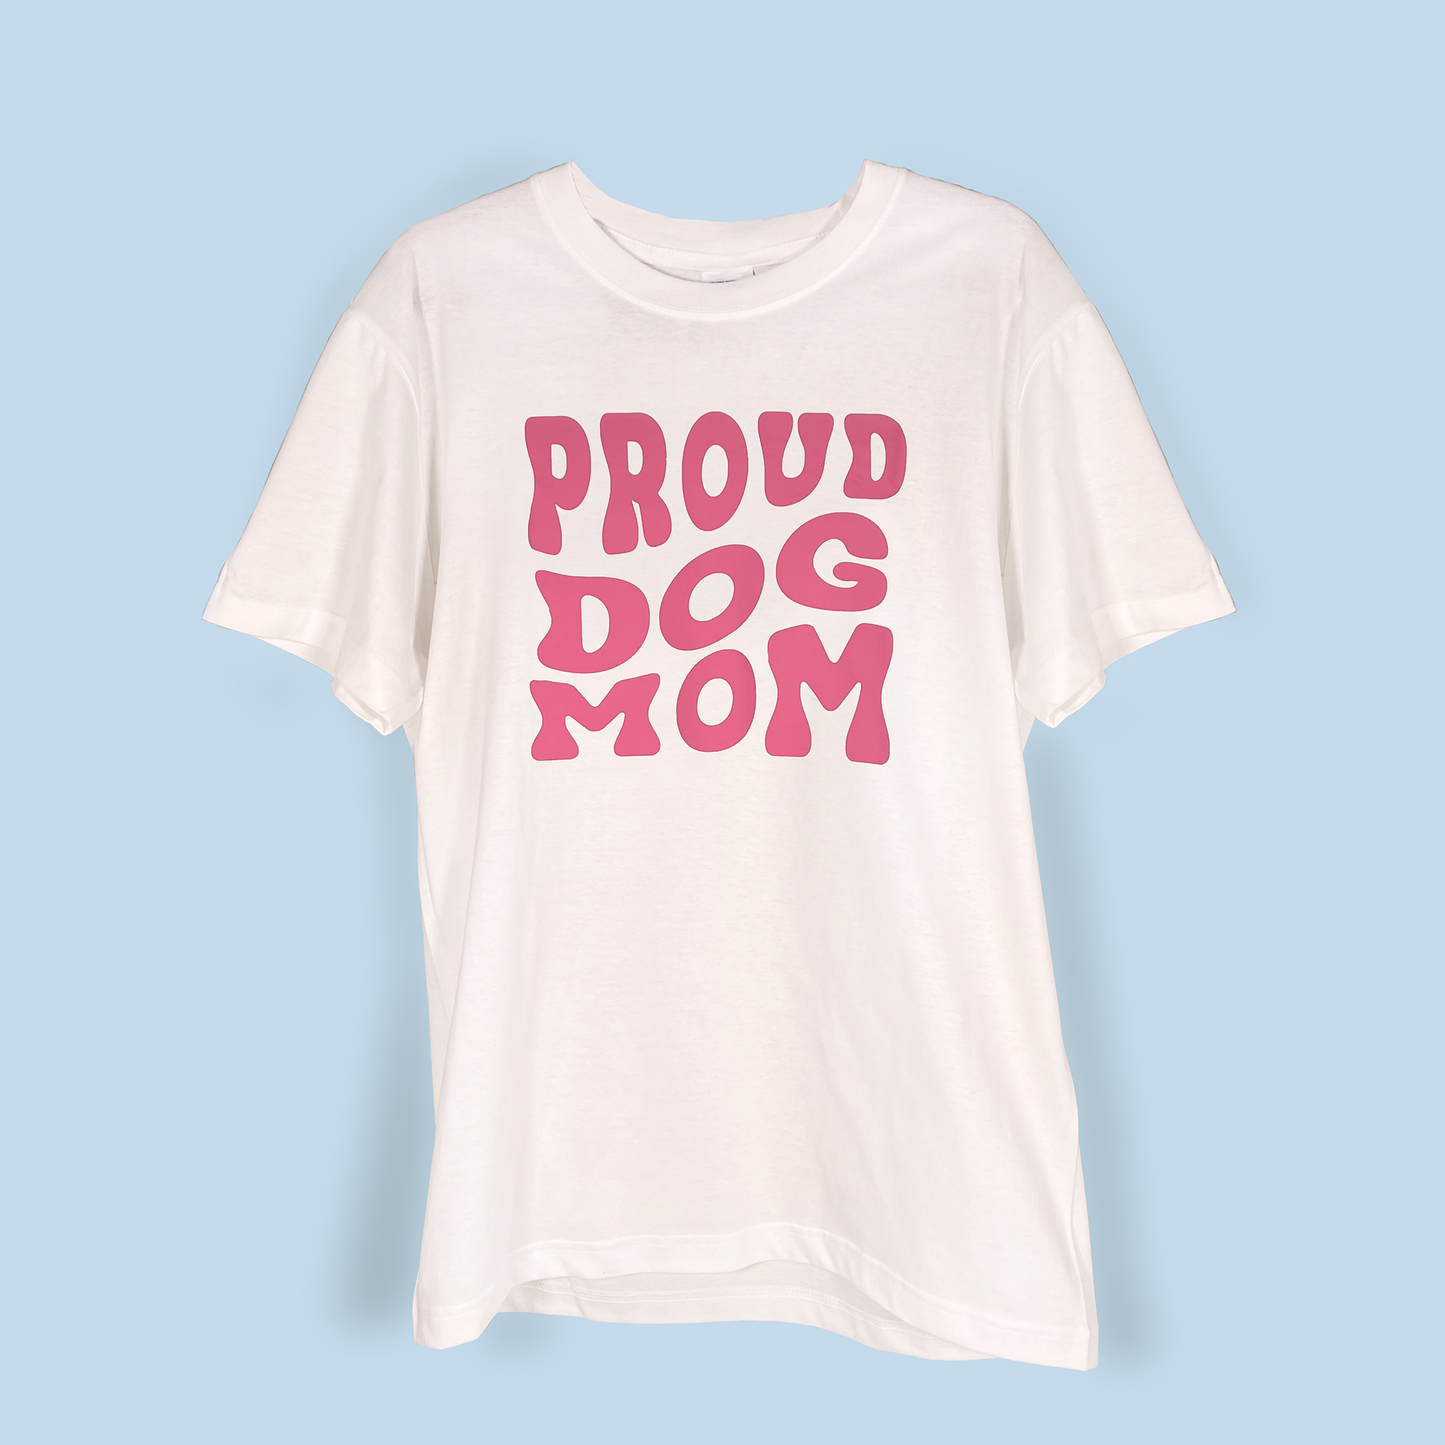 t-shirt_proud_dog_mom_pet_pwr